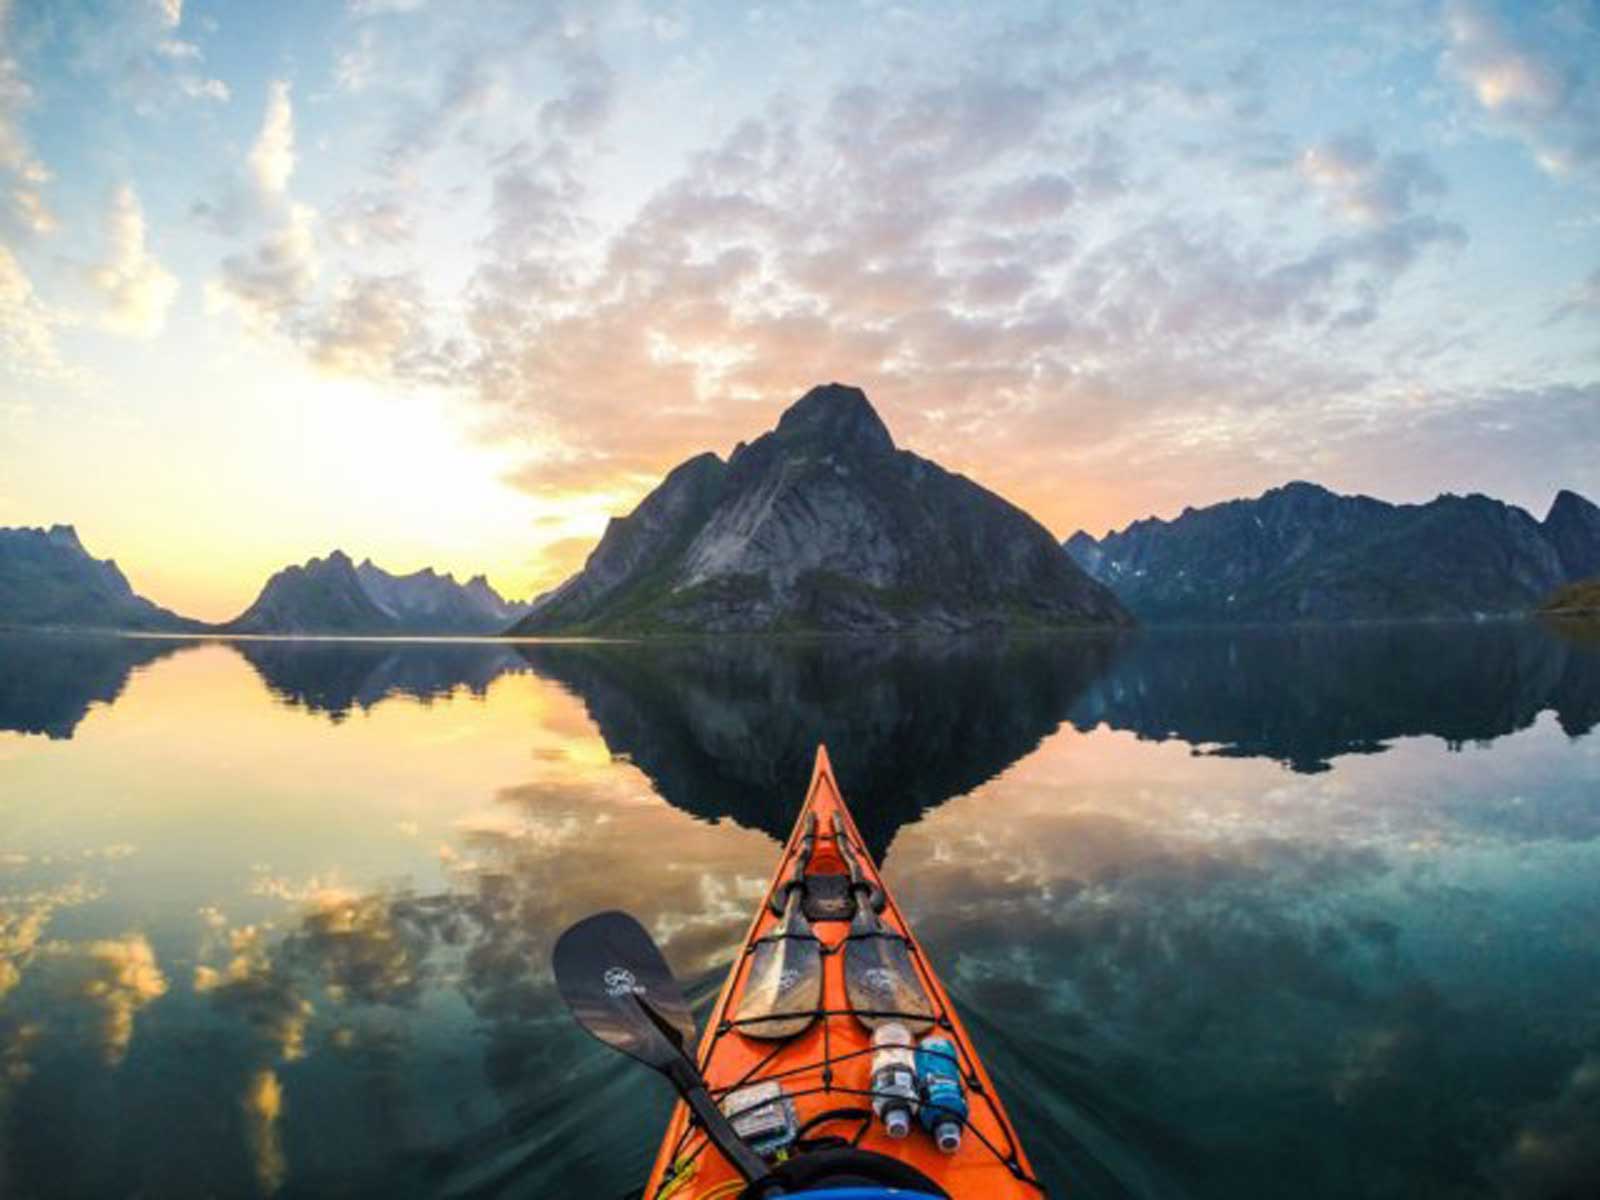 Breathtaking Gopro Kayak Photography Of Norways Fjords